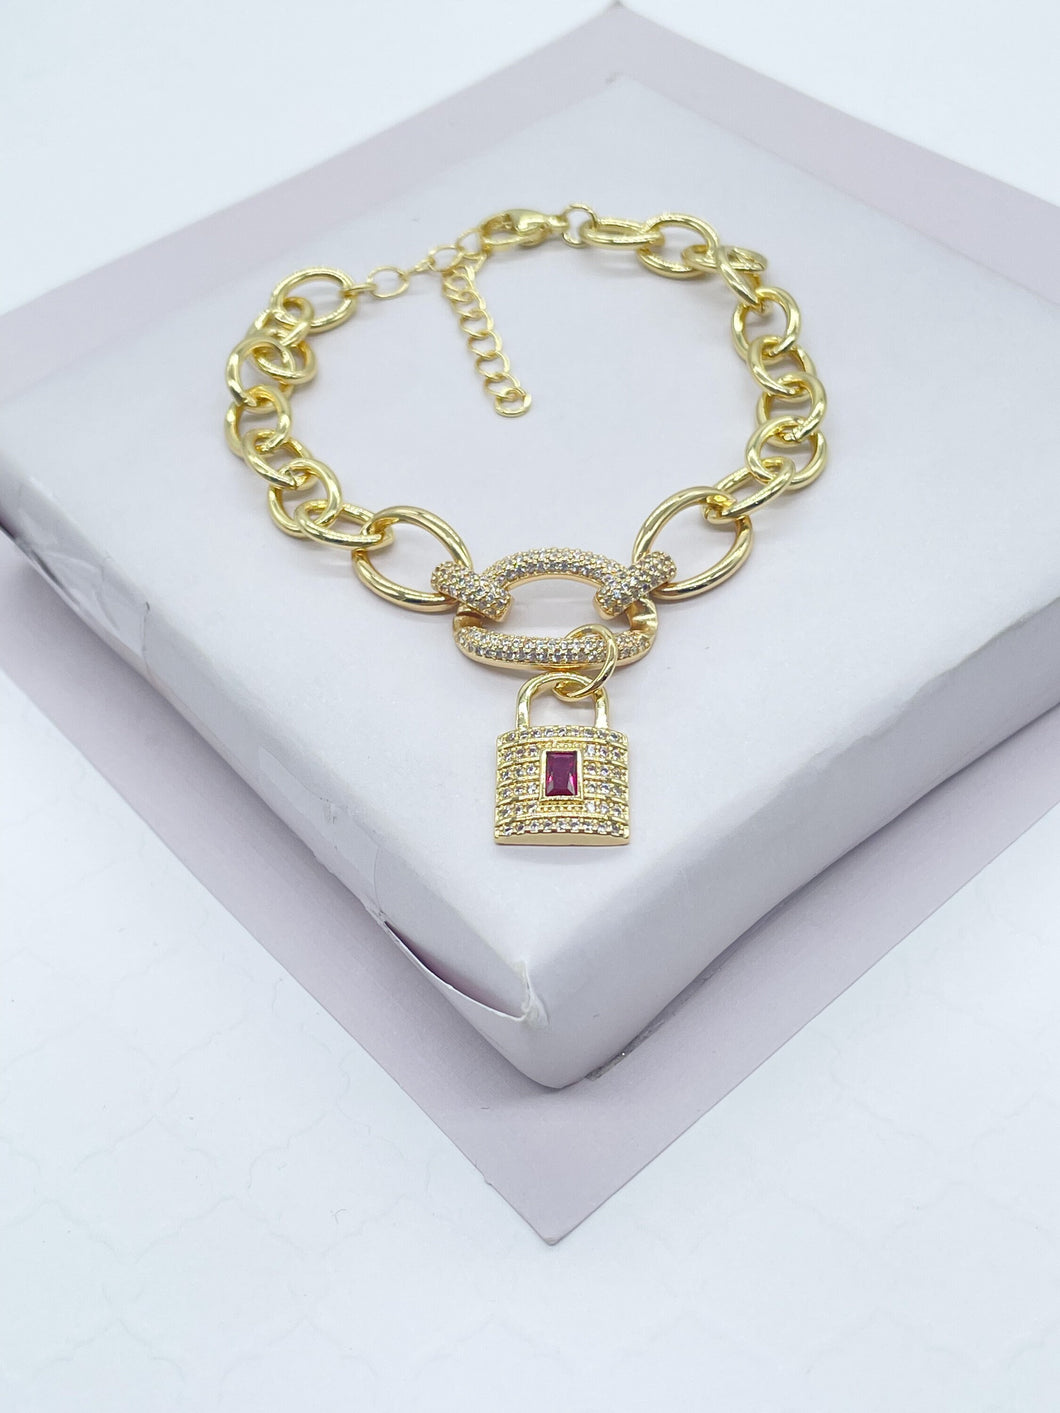 18k Gold Filled Single Lock Charm Bracelet | Wholesale Jewelry Supplies | Chunky Bracelet | Cubic Zirconia Bracelet Gold